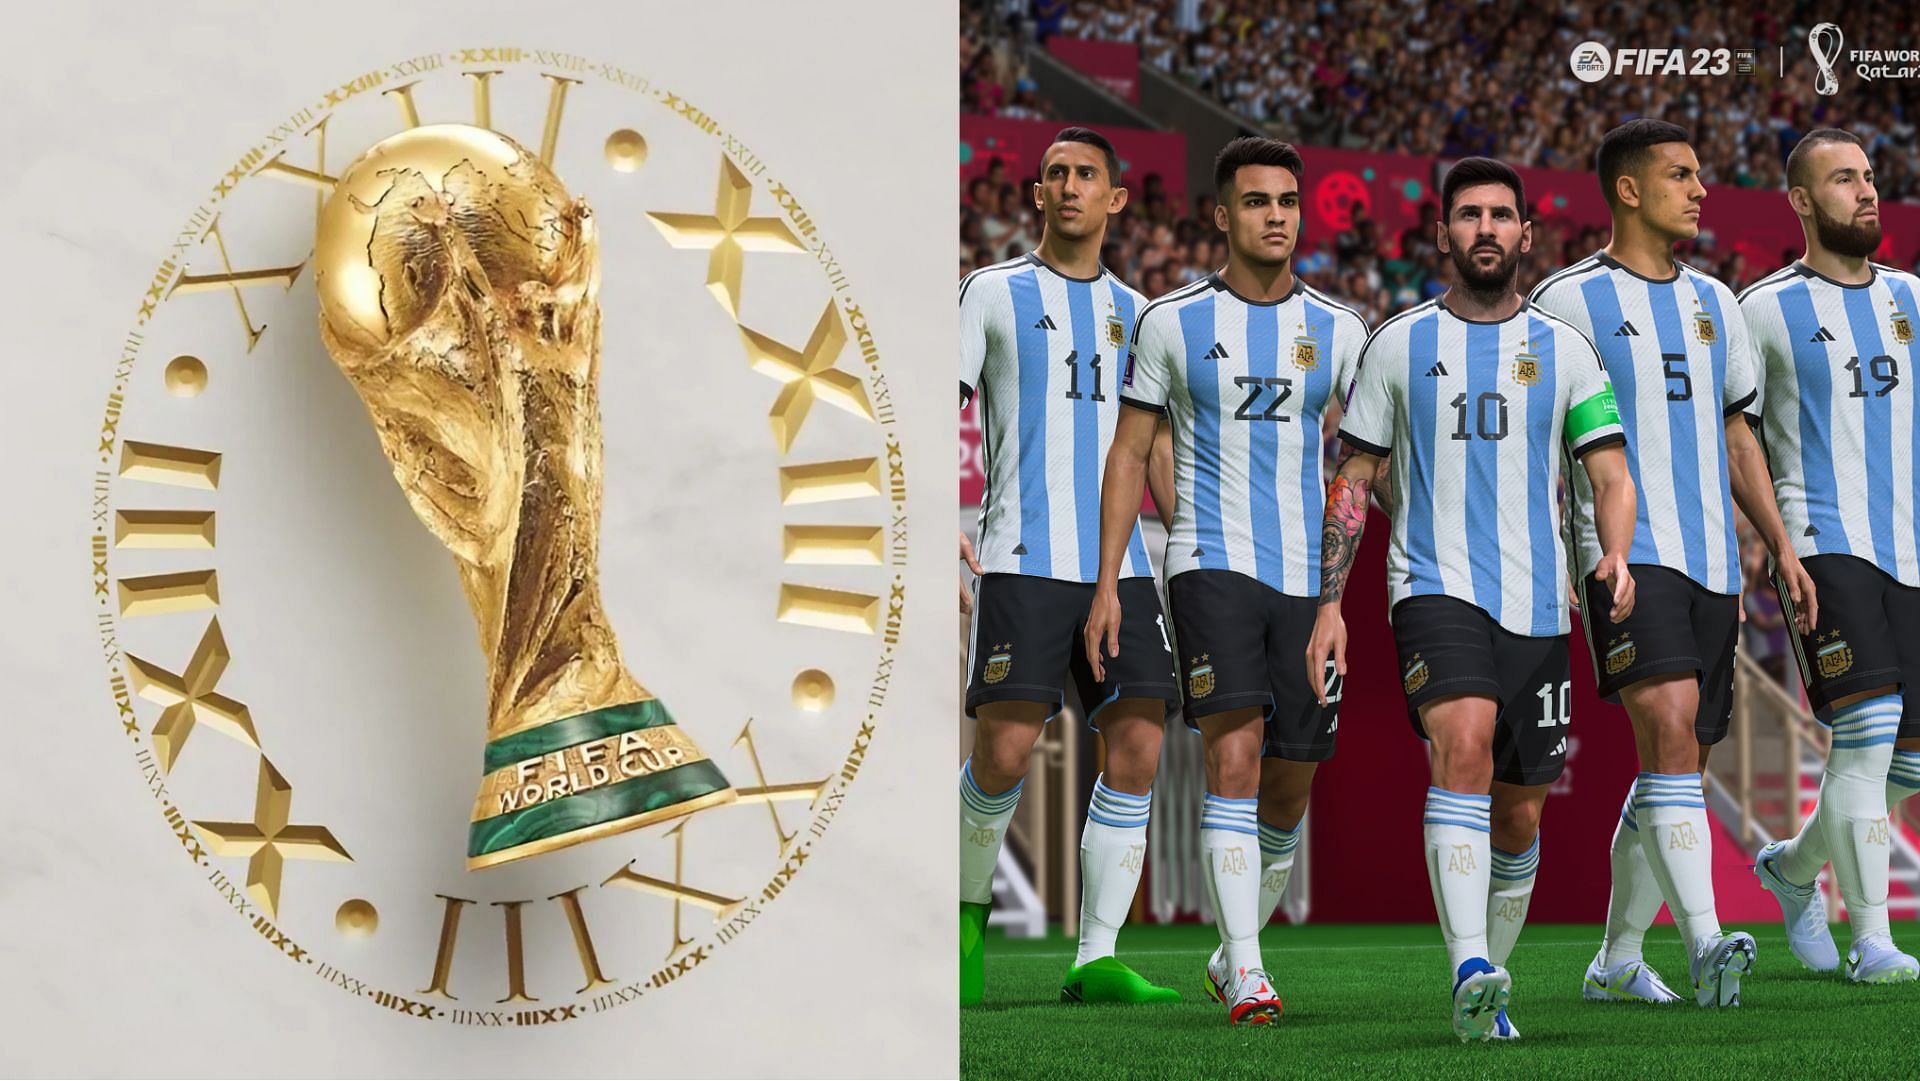 FIFA-23 PS5, Portugal Vs Argentina ft. Ronaldo, Messi, FIFA World Cup  Final